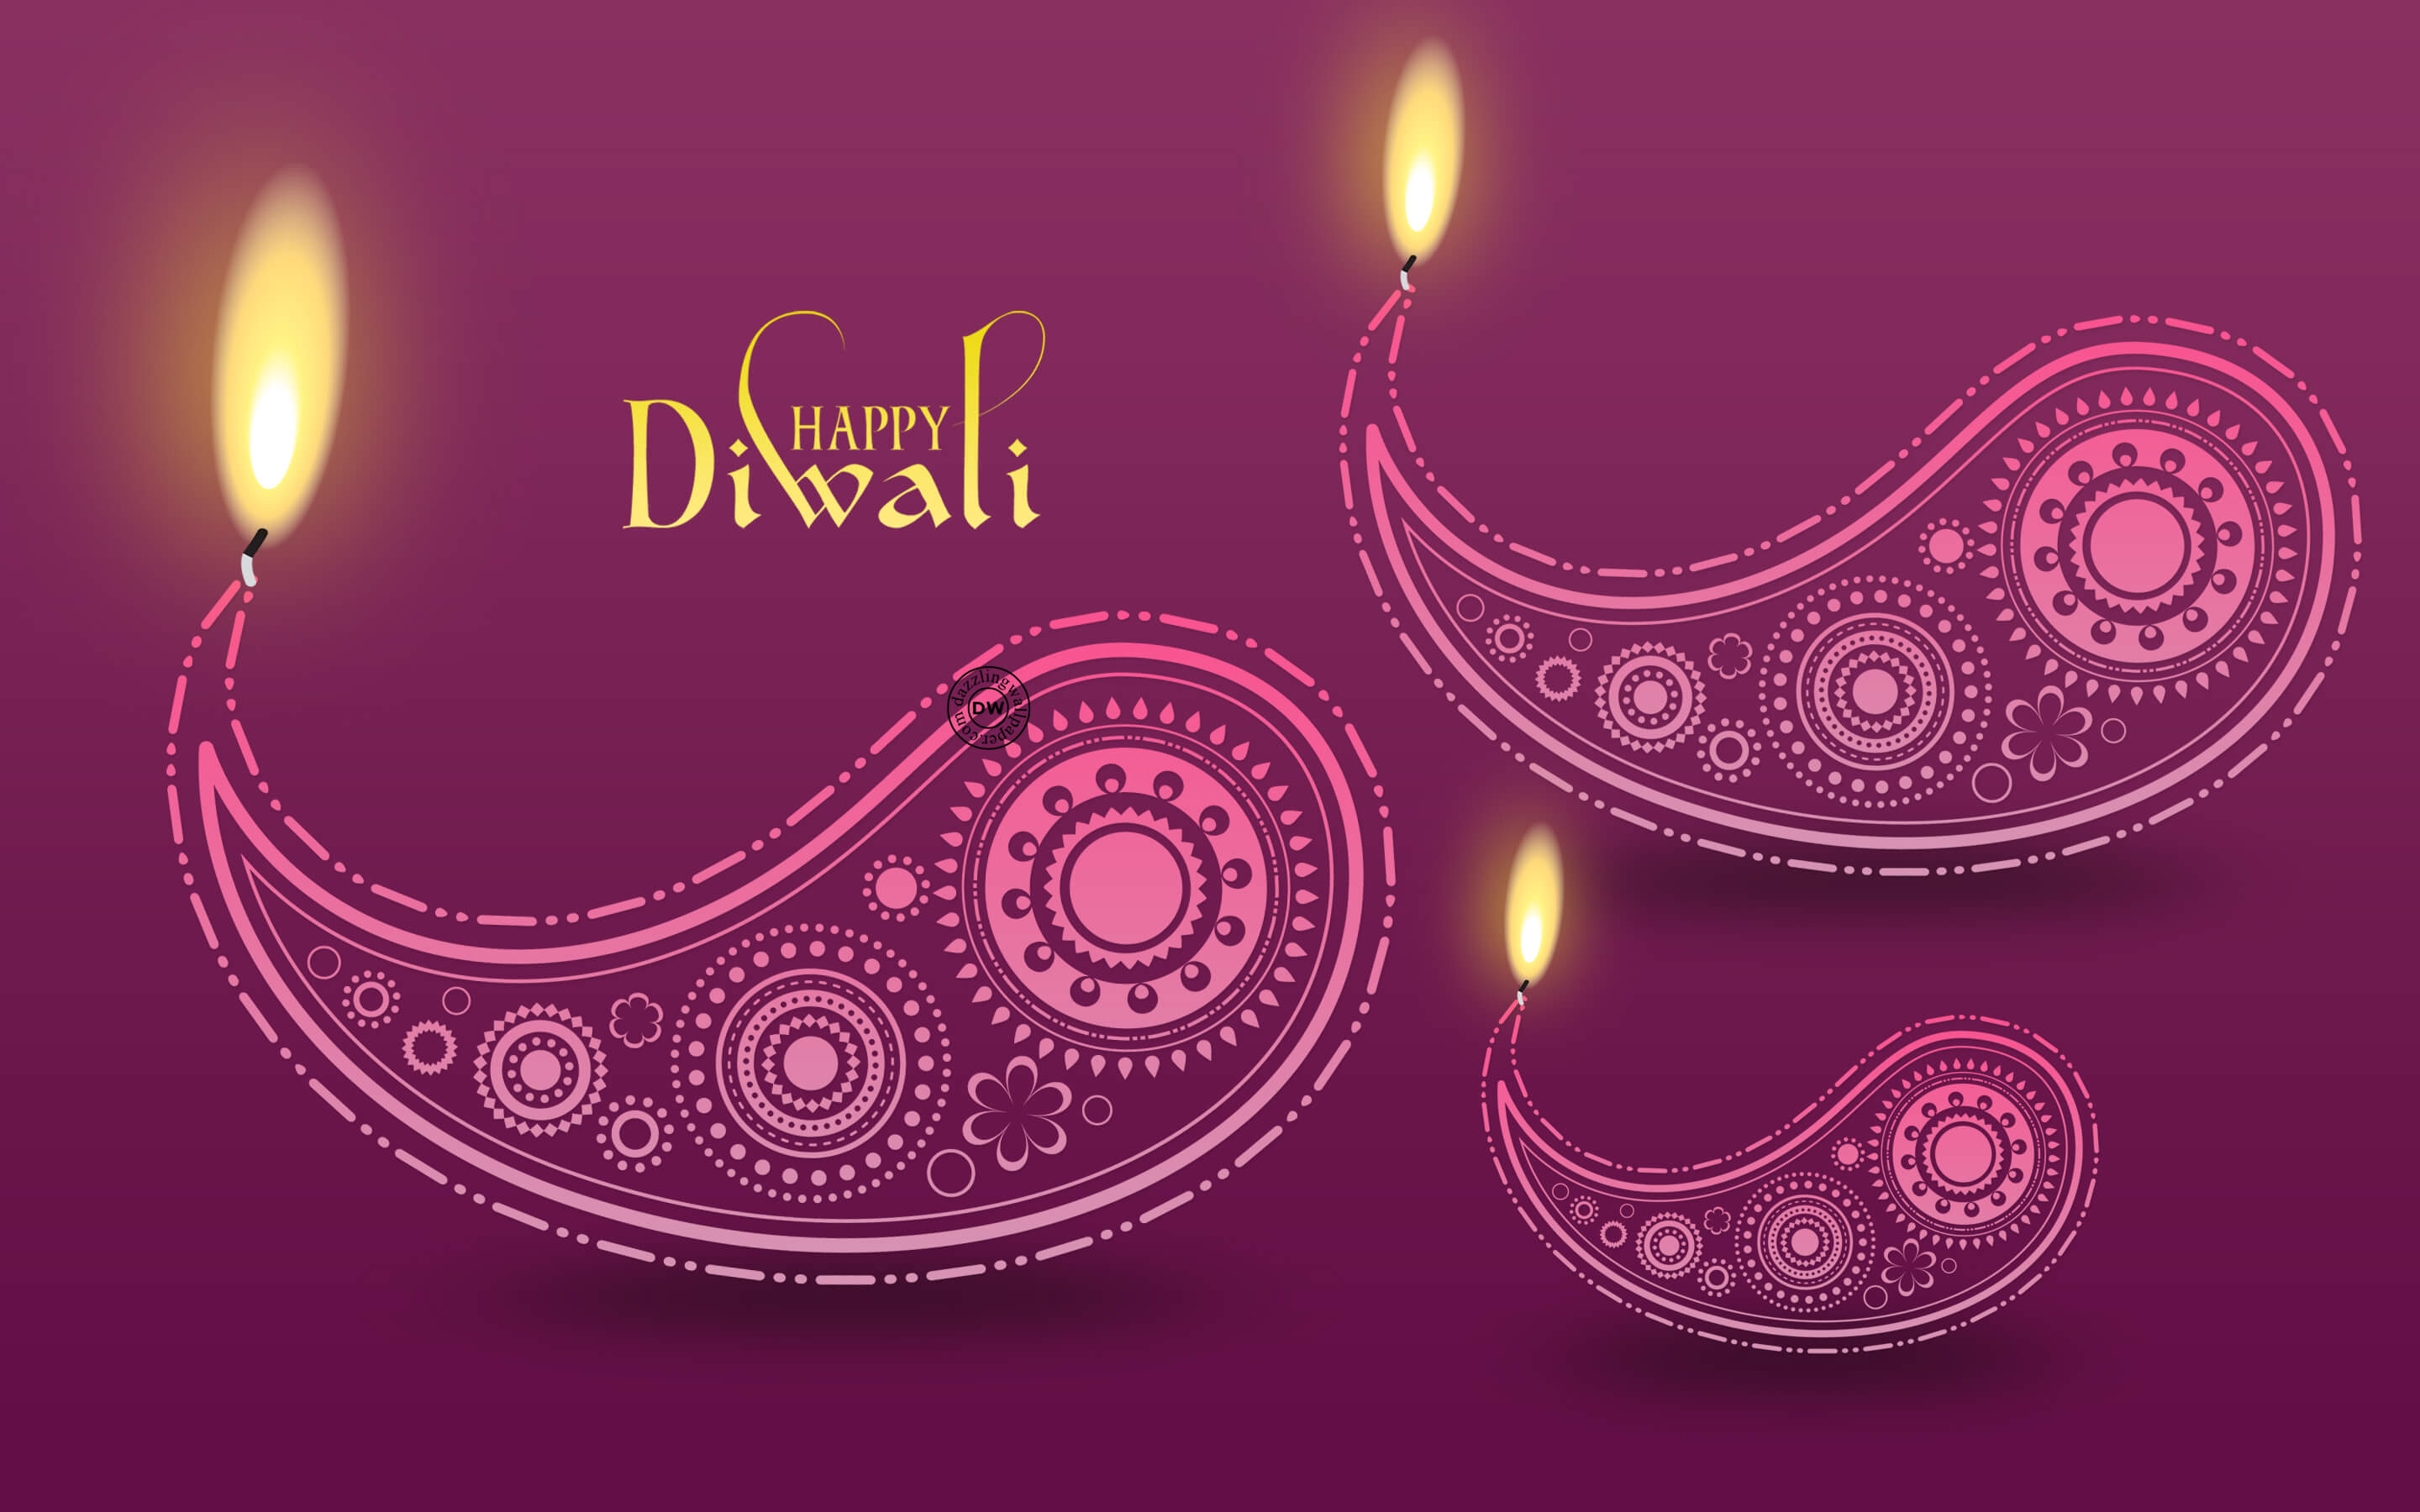 diwali wallpaper,lighting,candle,text,diwali,holiday